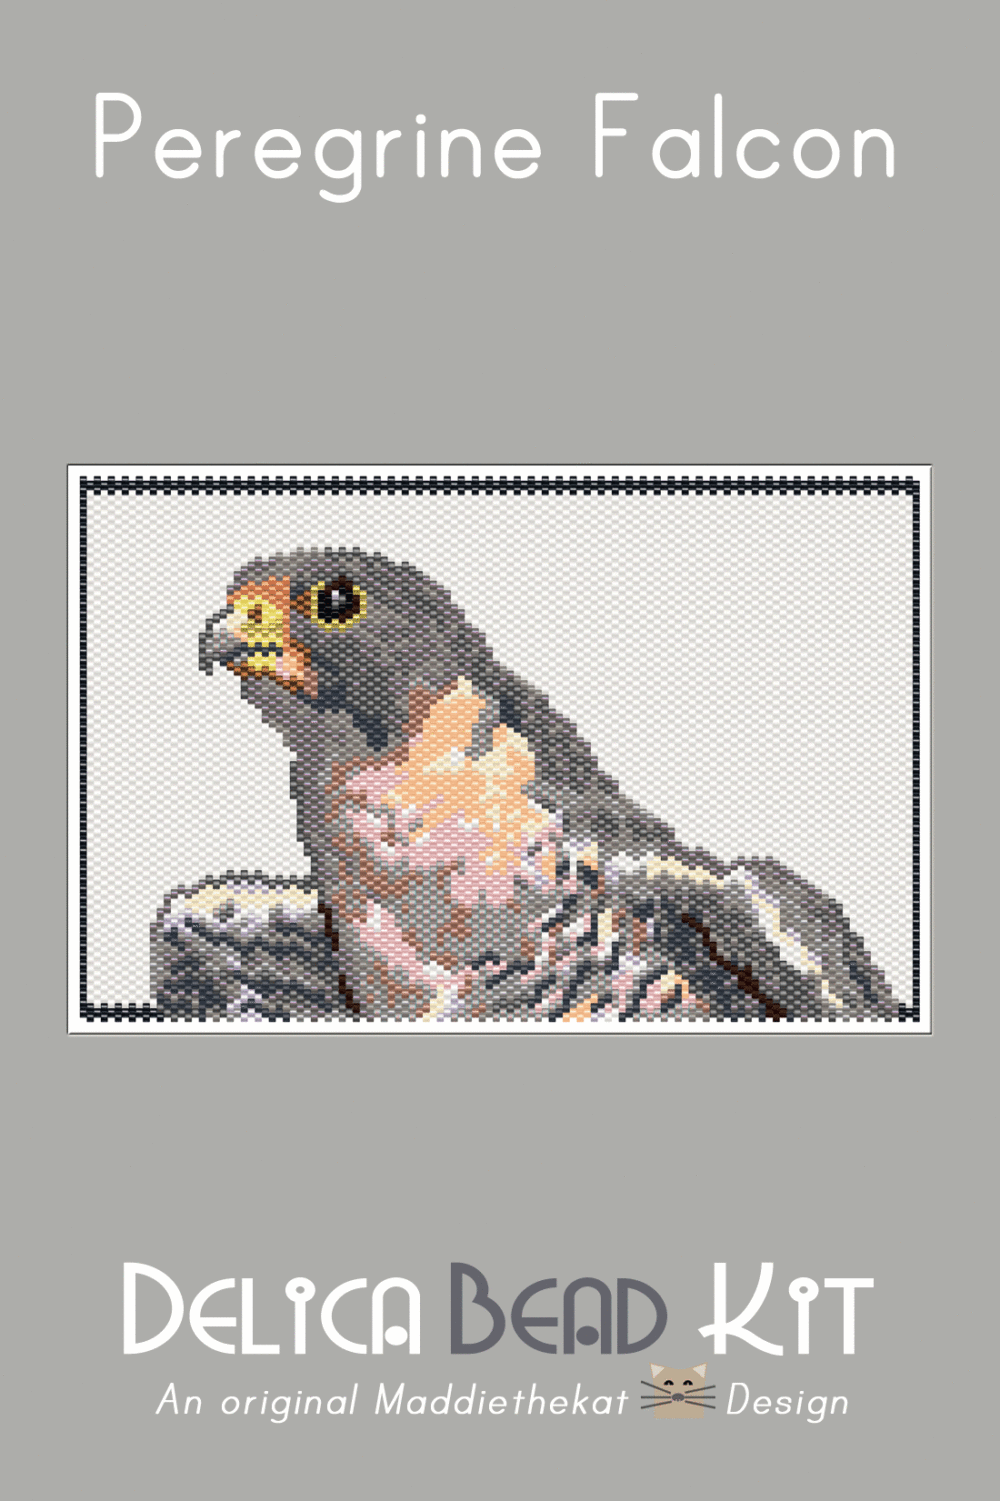 Peregrine Falcon Larger Peyote Bead Pattern PDF or Bead Kit